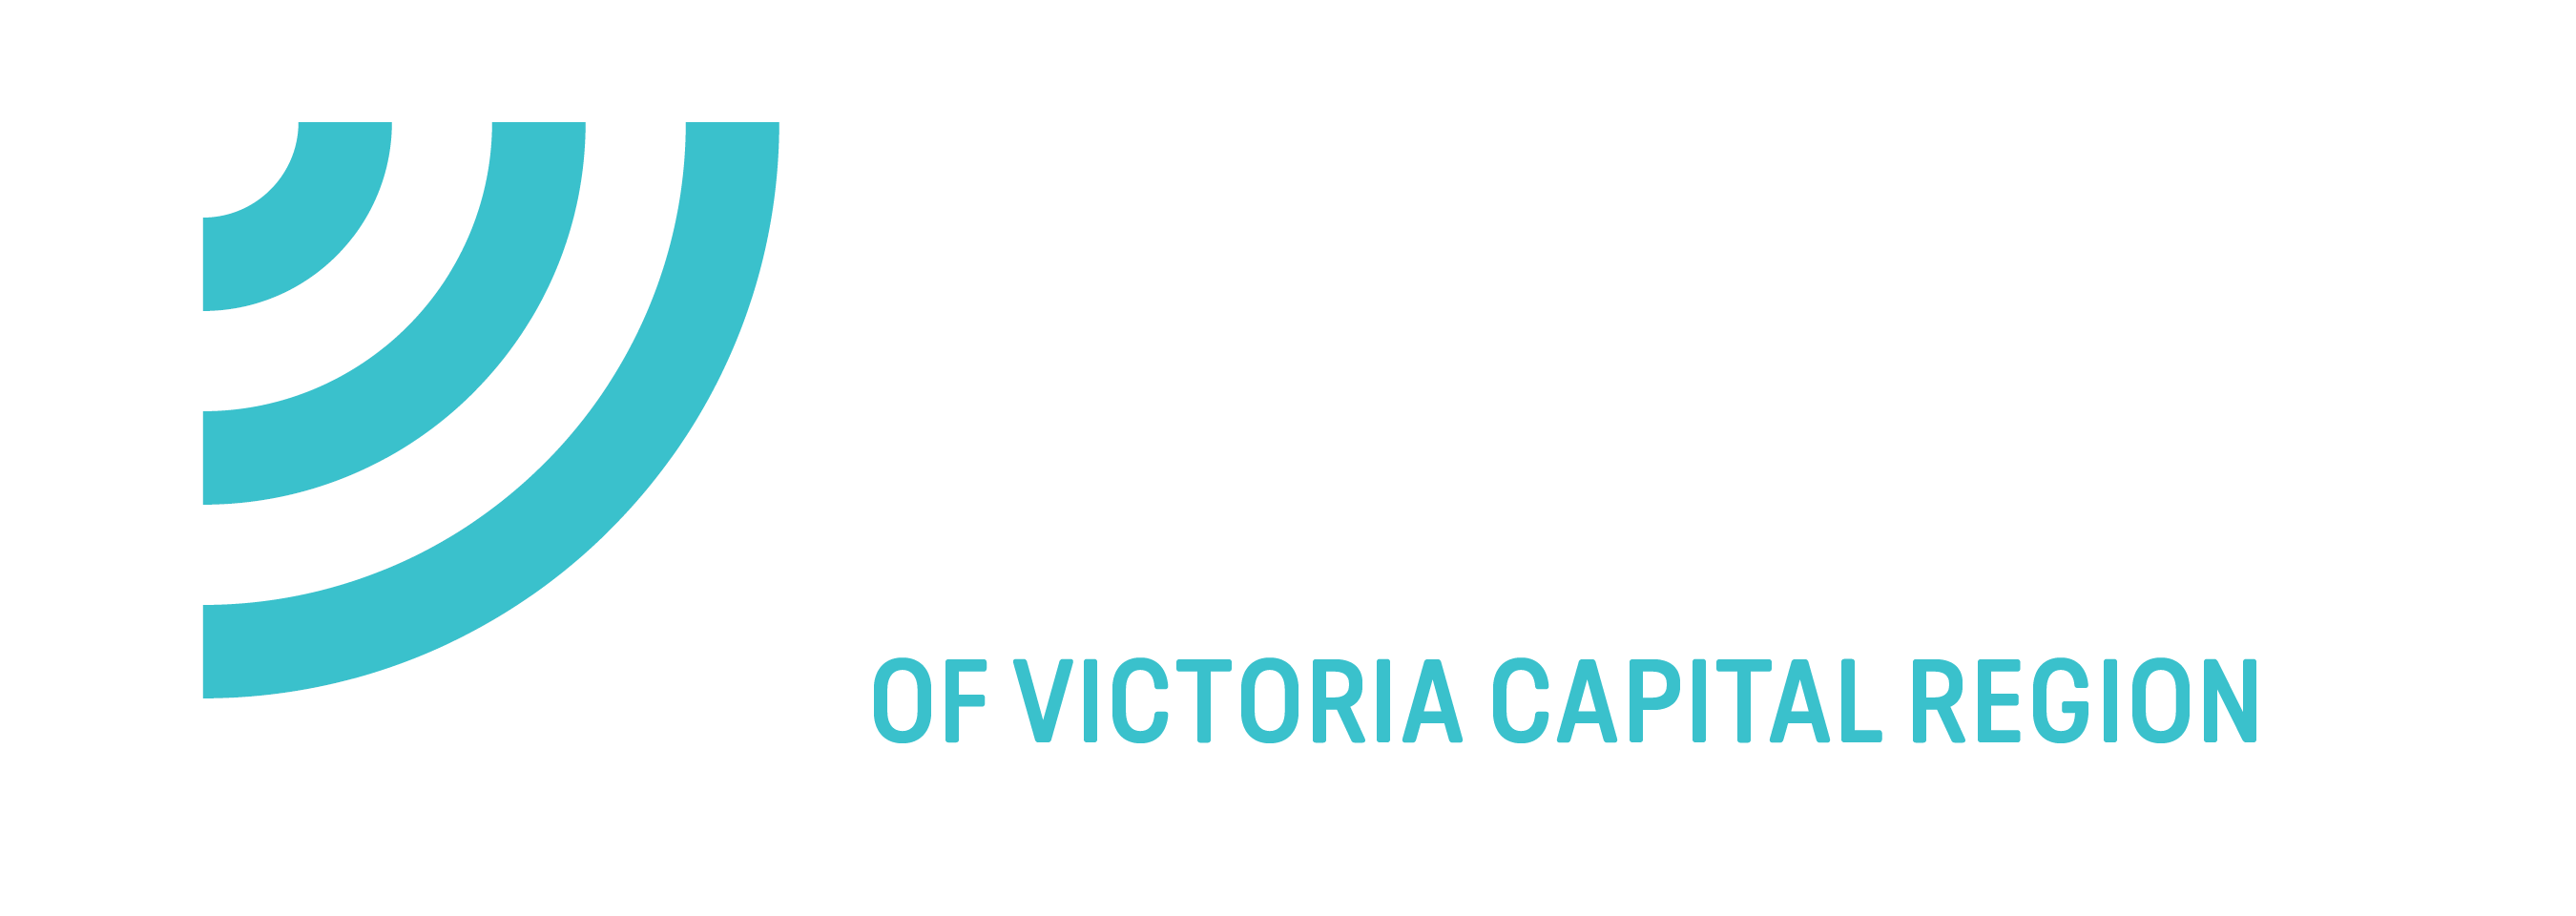 Mentoring Matters - Big Brothers Big Sisters of Victoria Capital Region